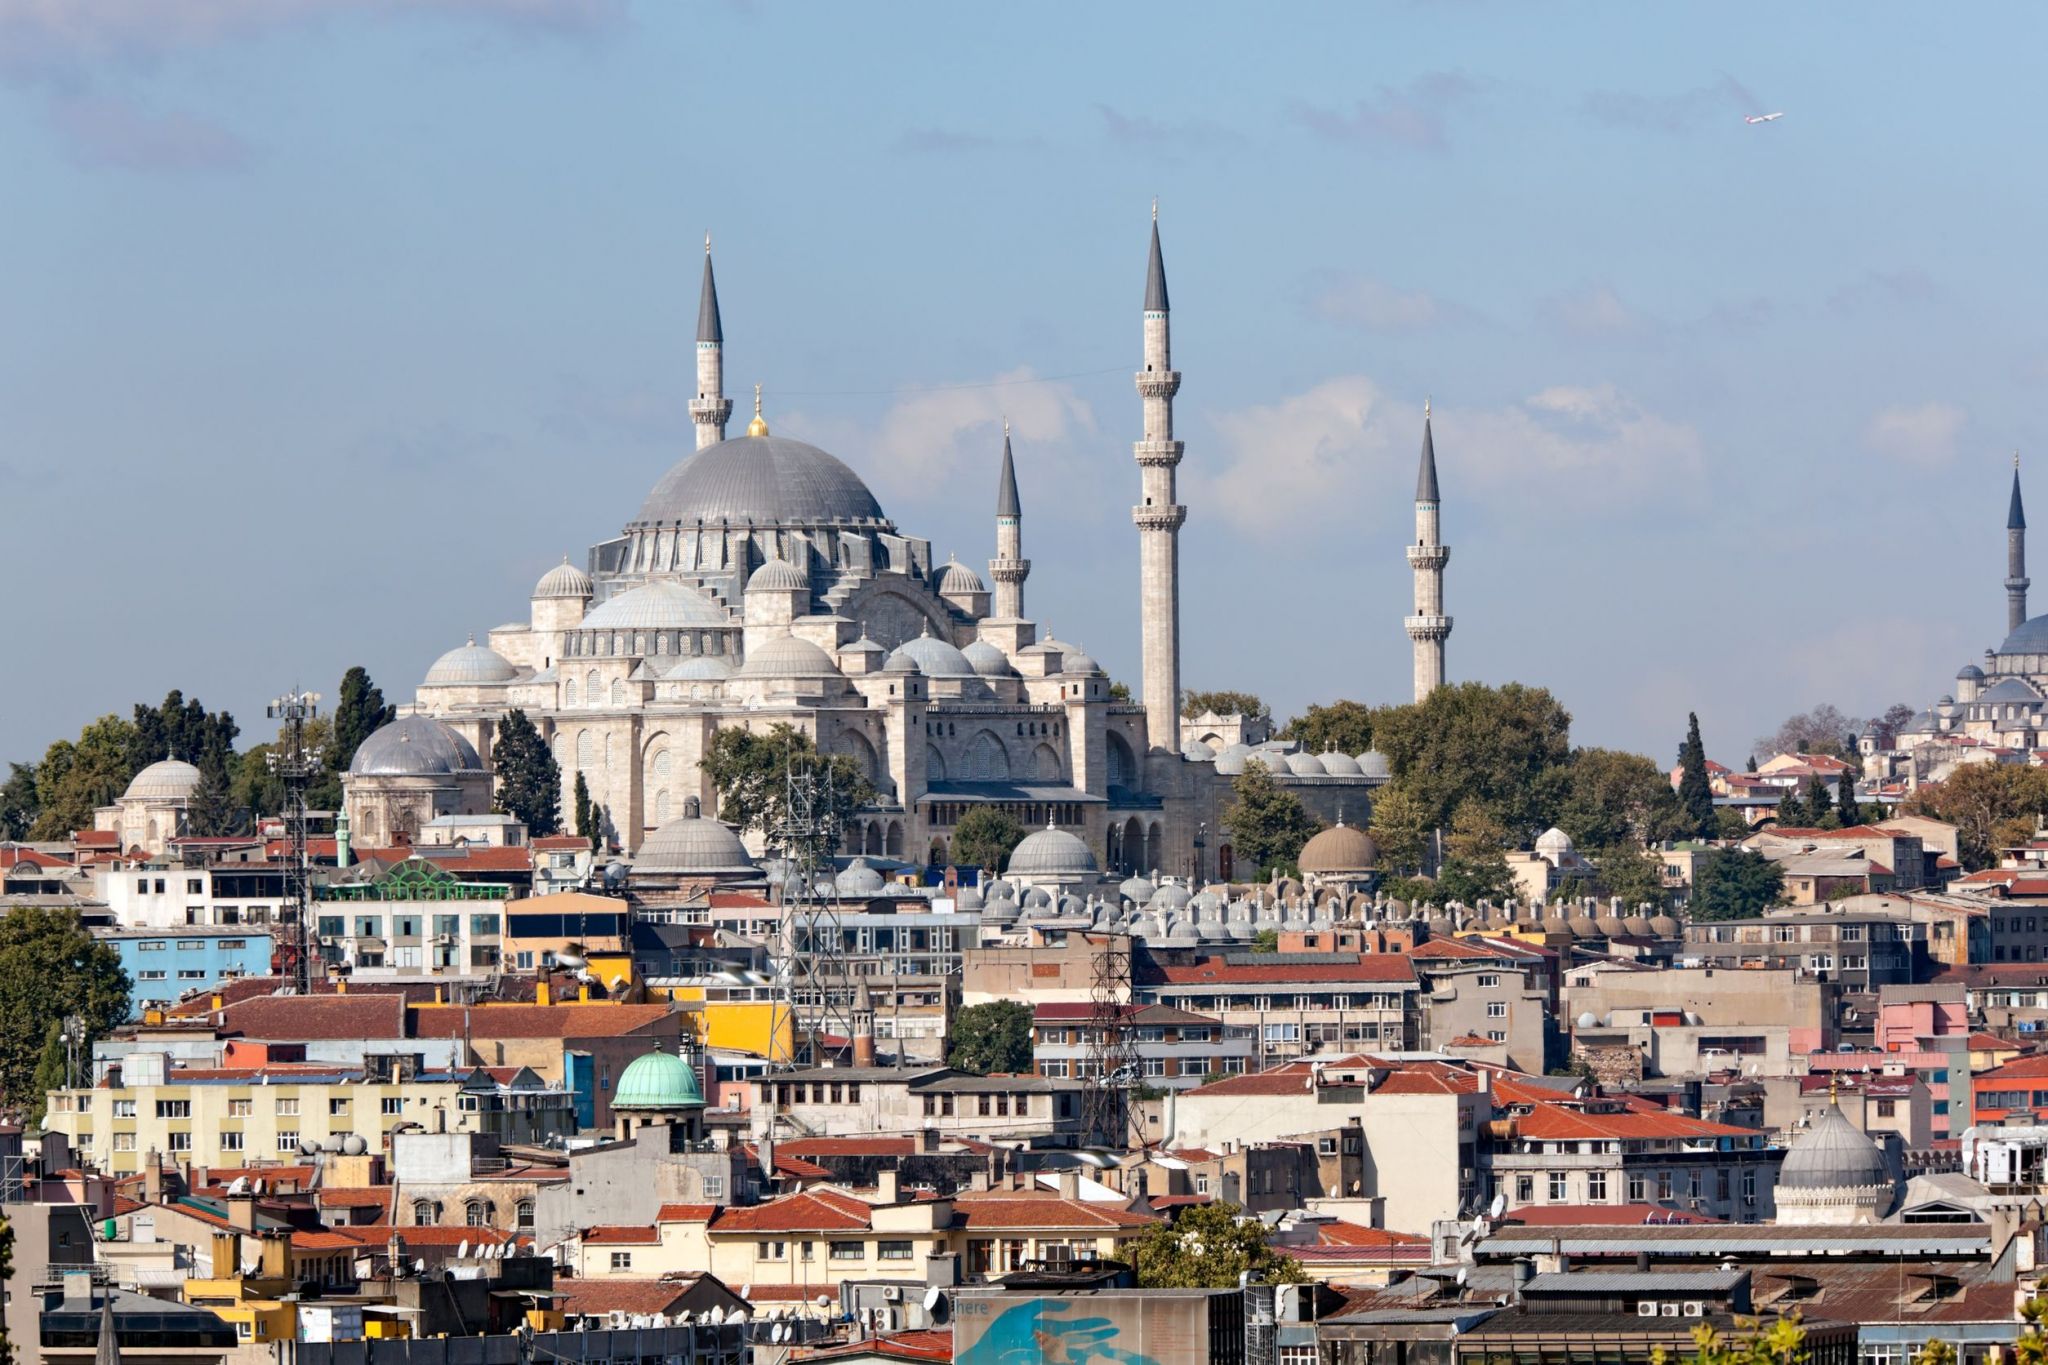 http://www.net4info.eu/albums/albums/userpics/10003/suleymaniye_mosque_istanbul.jpg